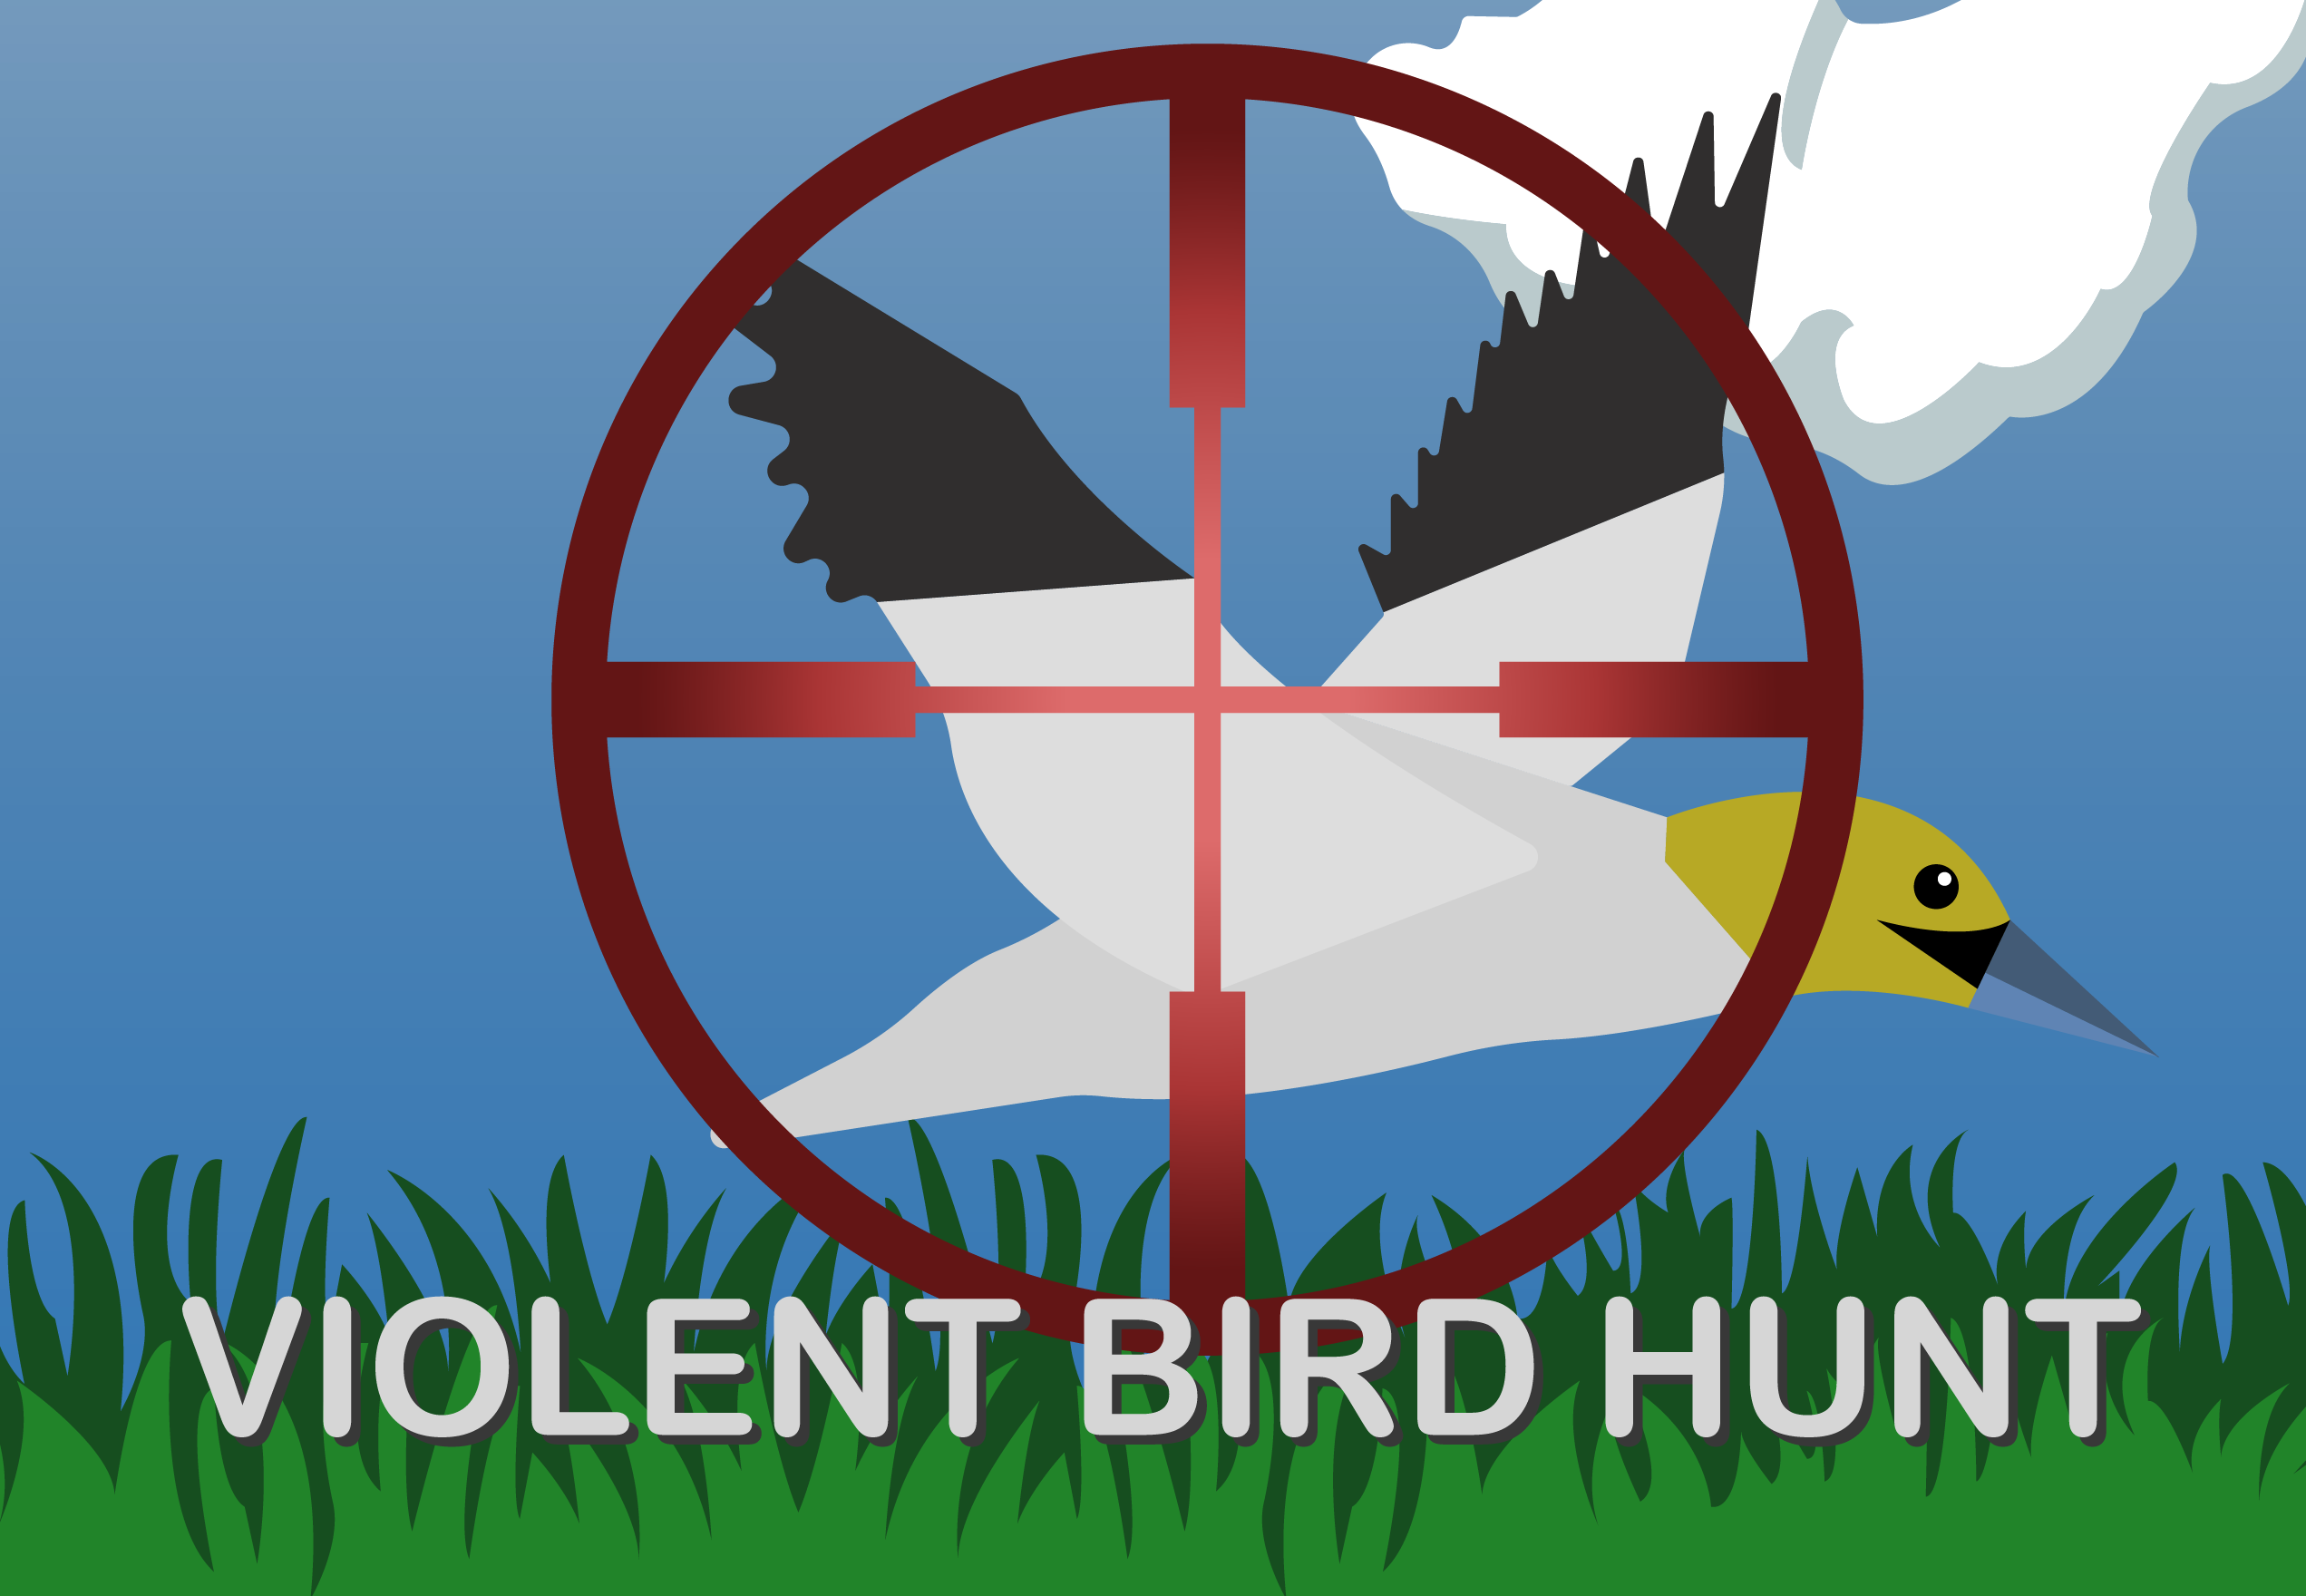 Violent Bird Hunt